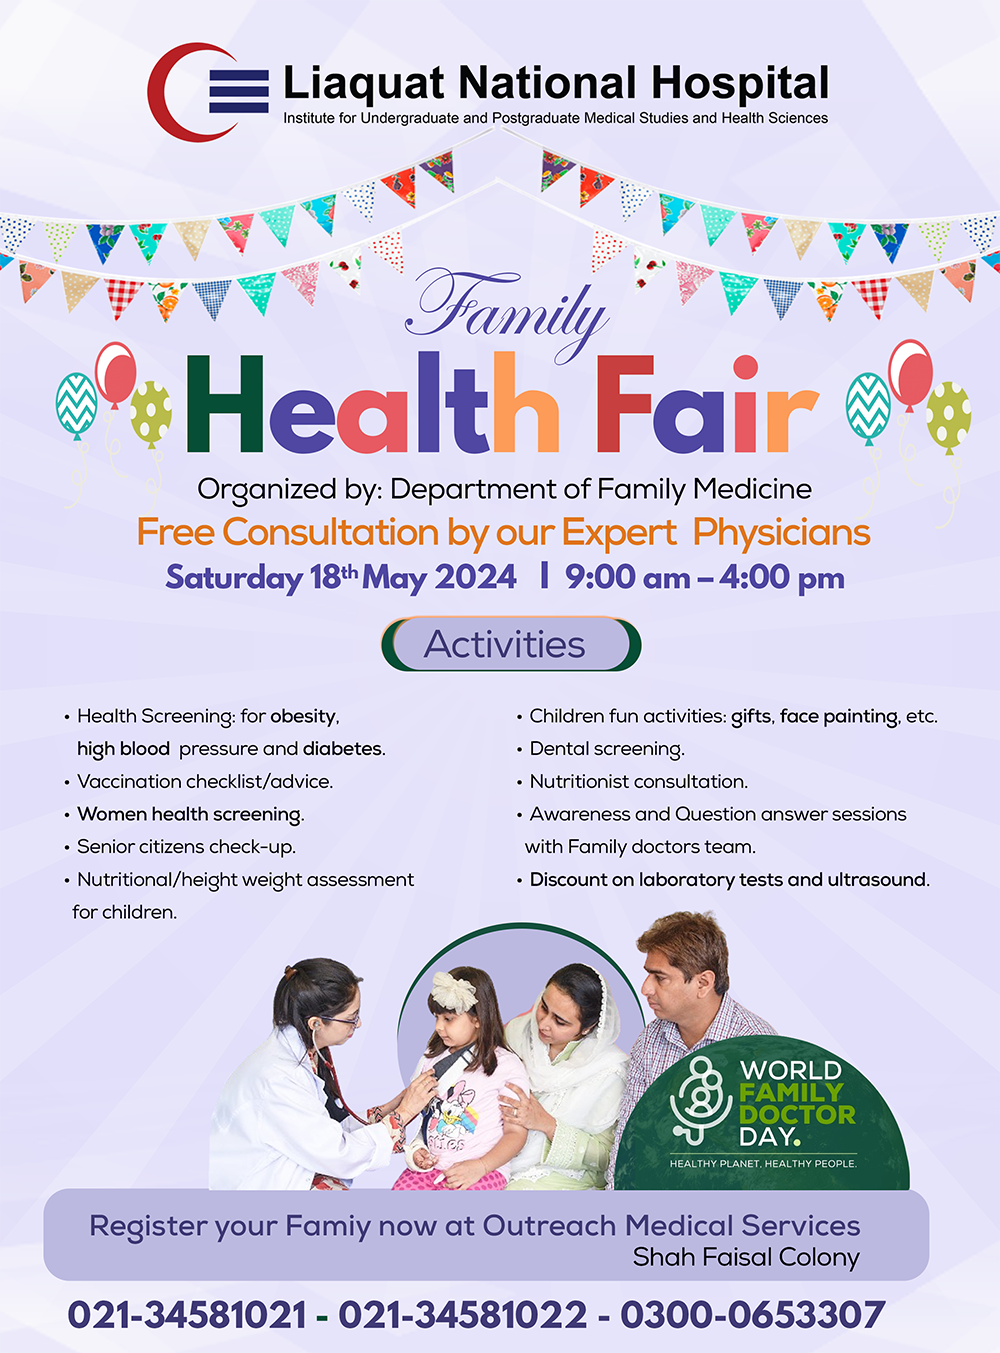 Health fair at LNH Outreach Services Shah Faisal Colony, May 18, 2024